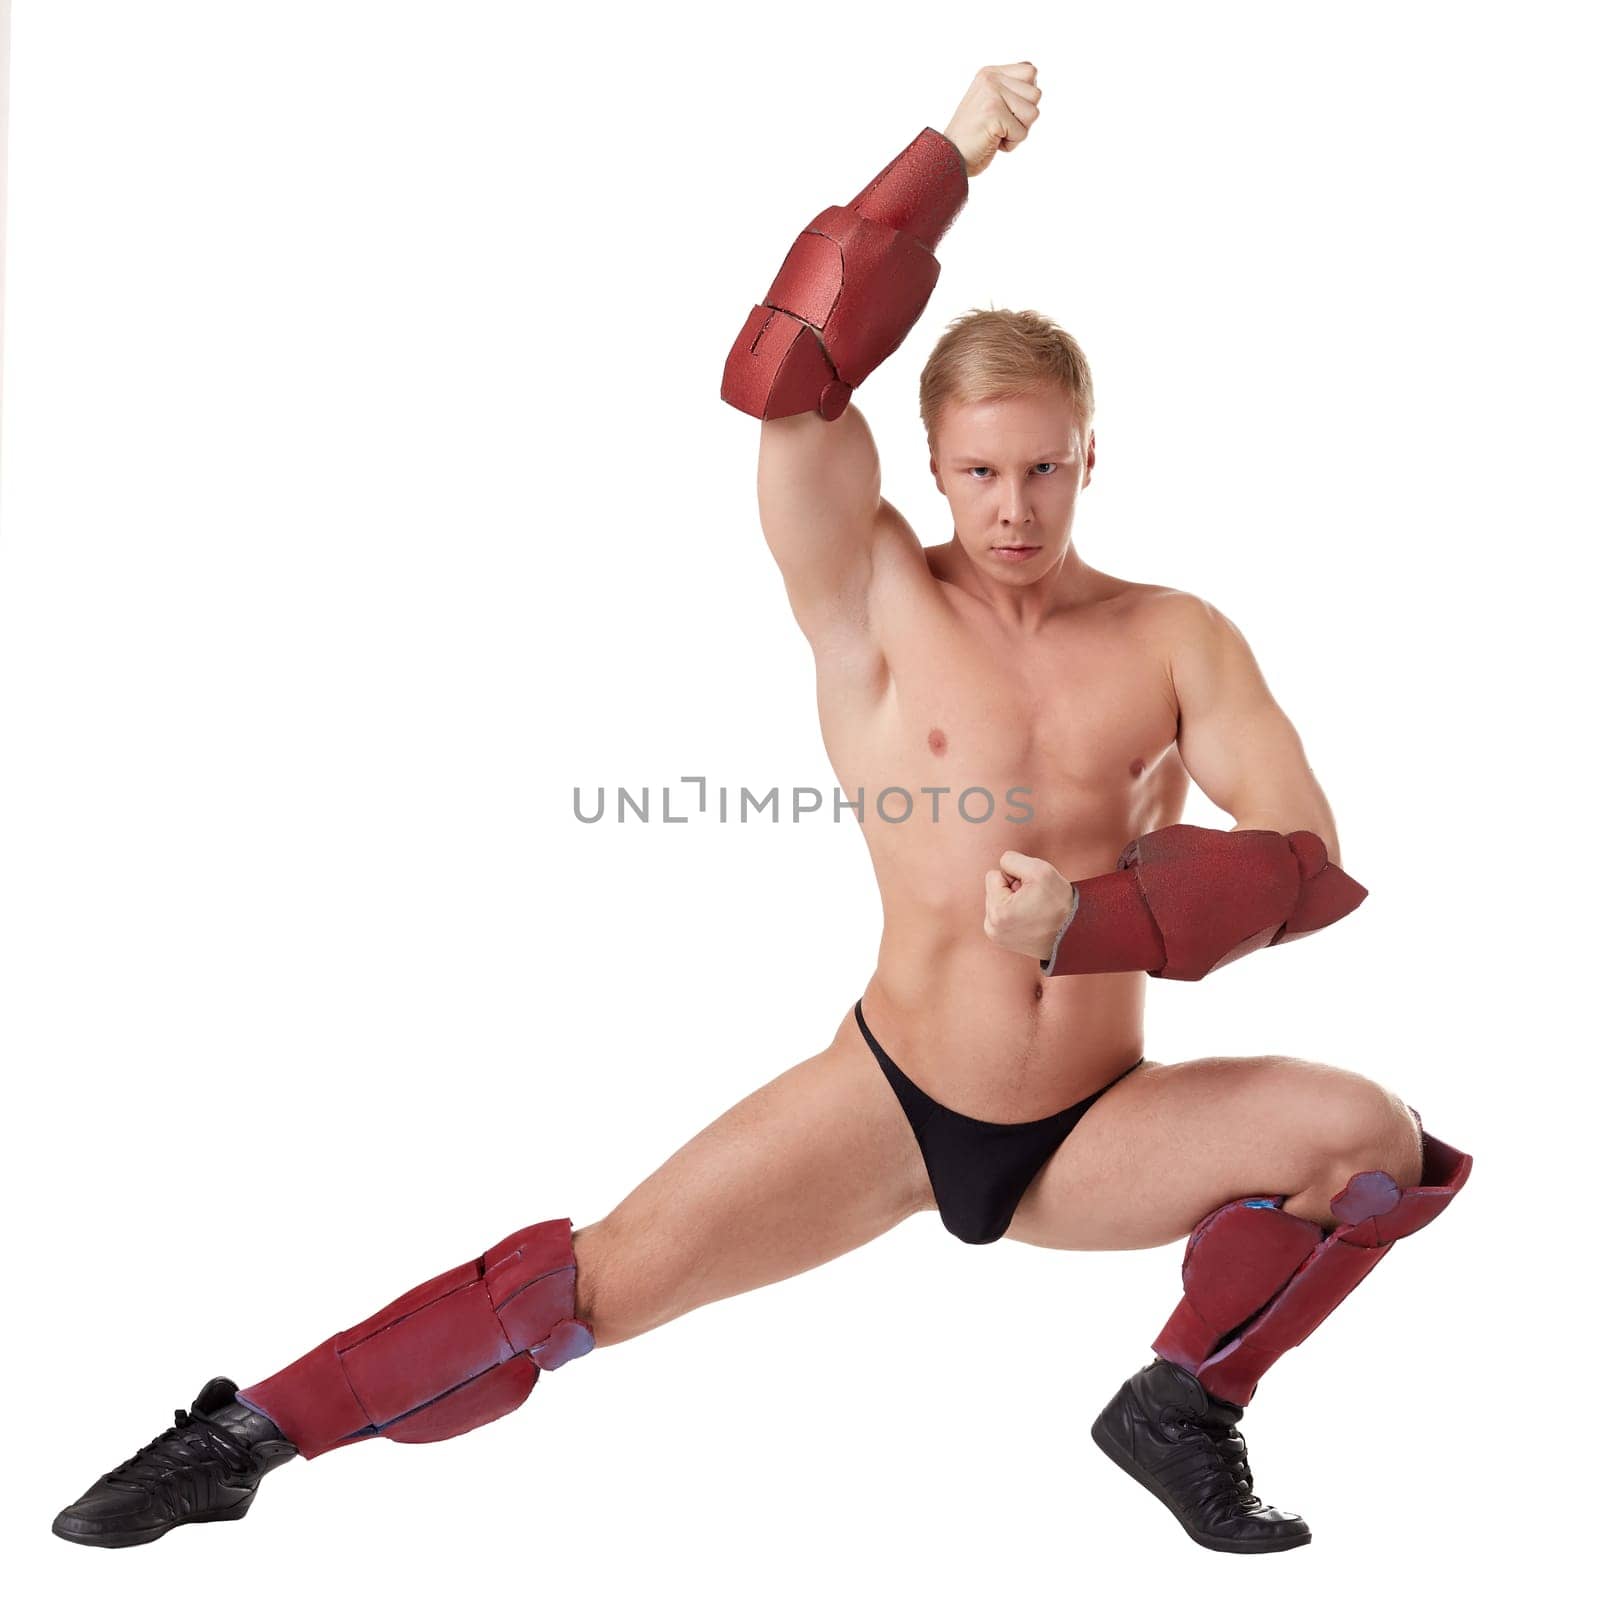 Gloomy muscular man posing in erotic costume of superhero